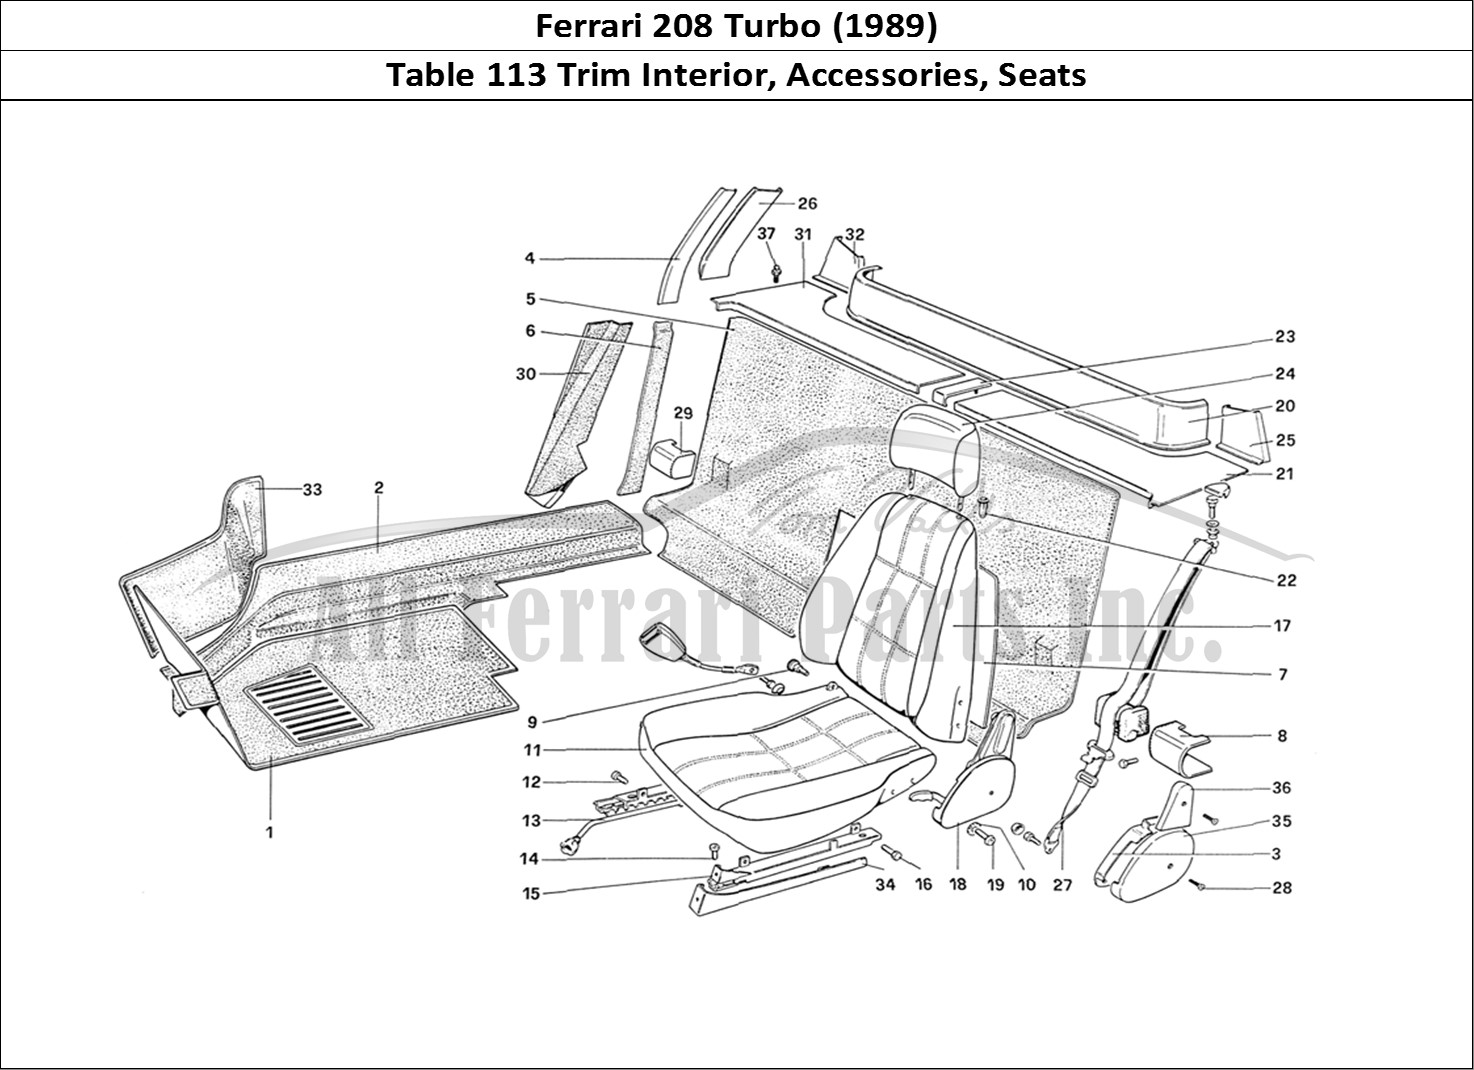 Ferrari Parts Ferrari 208 Turbo (1989) Page 113 Interior Trim, Accessorie